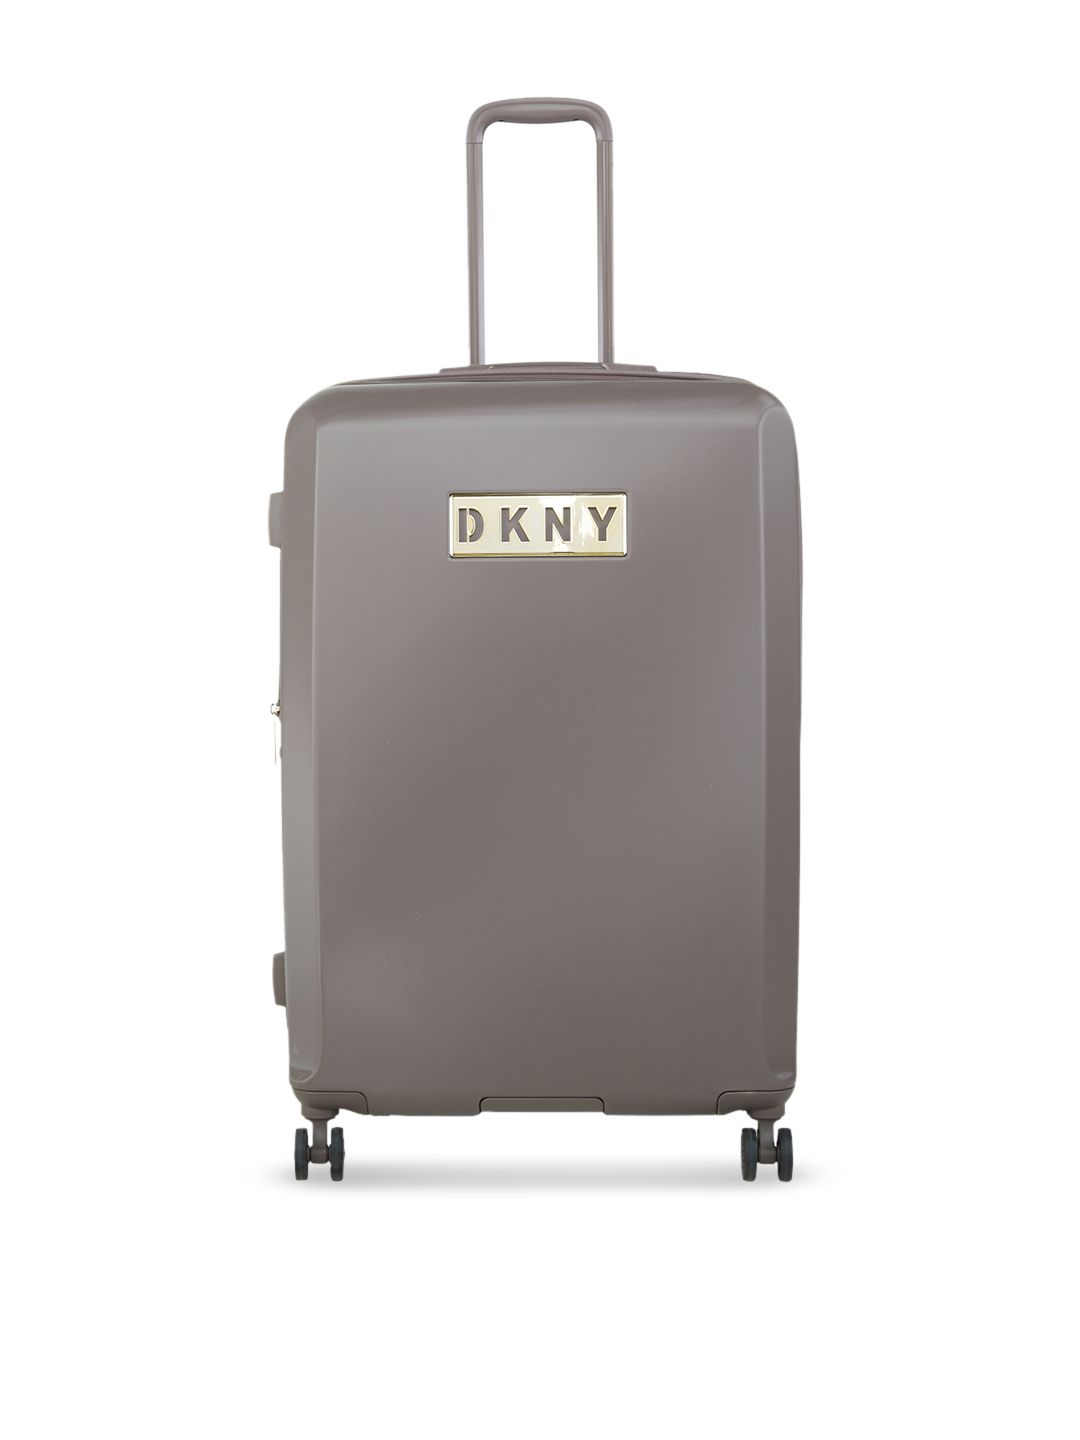 DKNY Alchemy Range Bronze Hard Large Suitcase Price in India